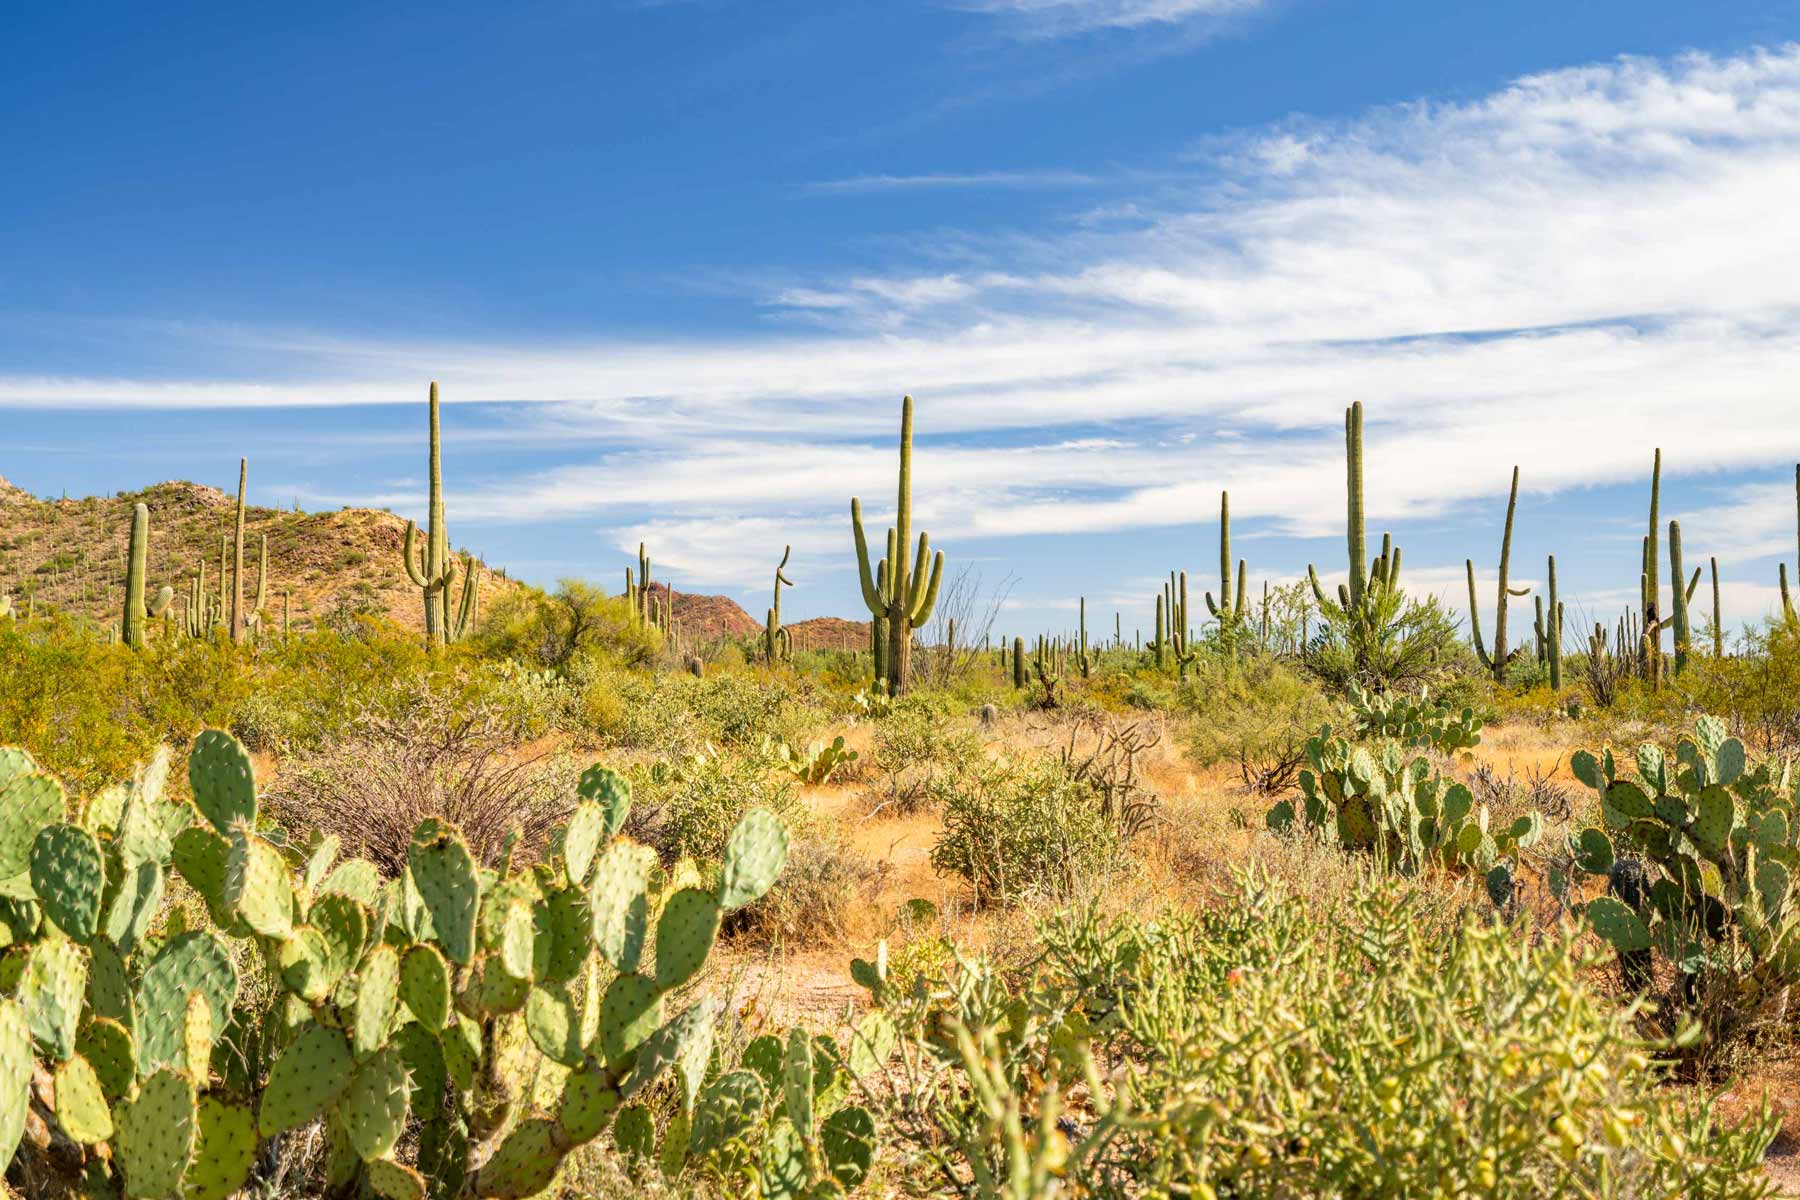 desert ecology trail, saguaro national park tucson arizona